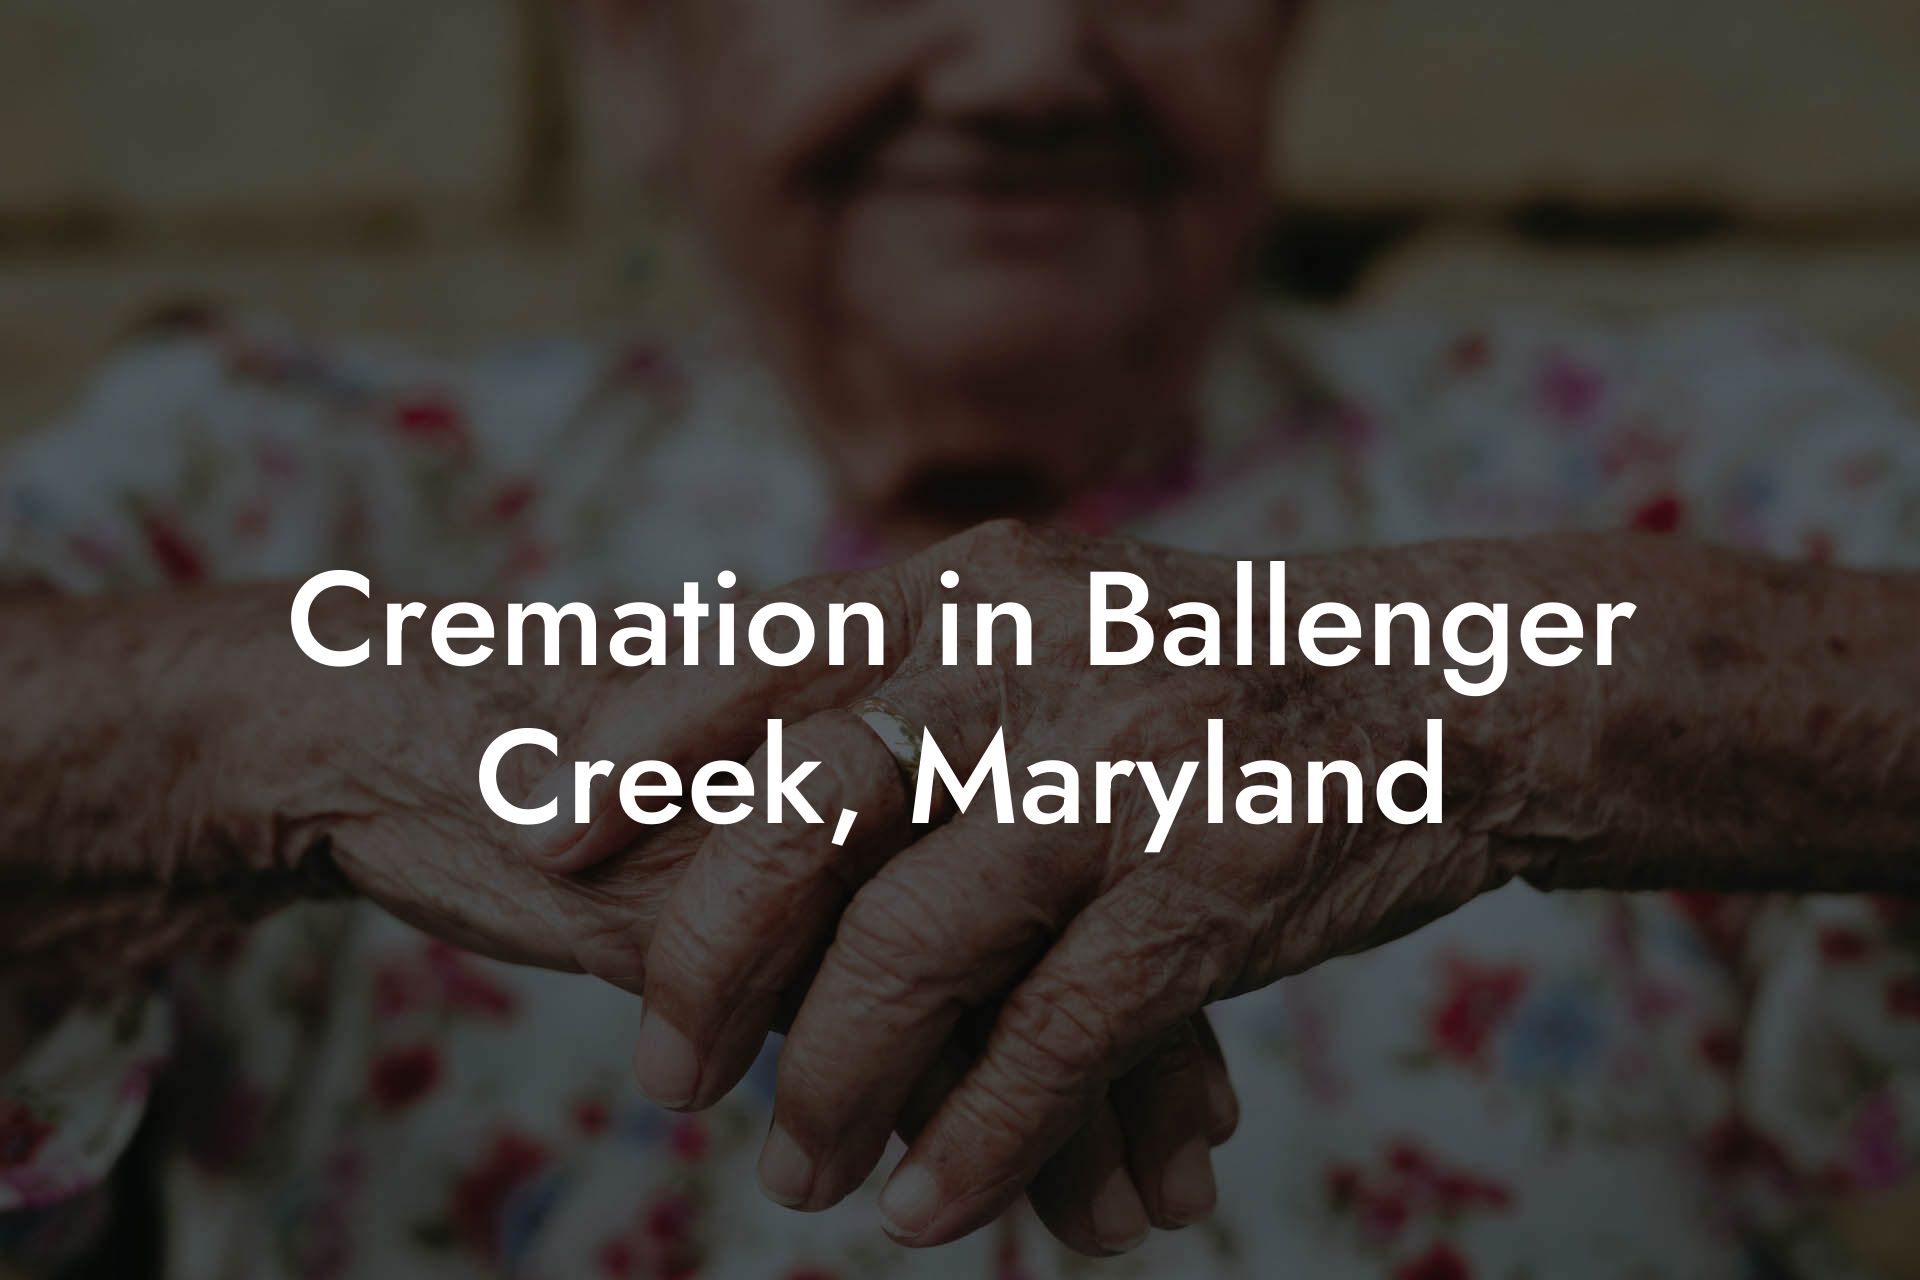 Cremation in Ballenger Creek, Maryland